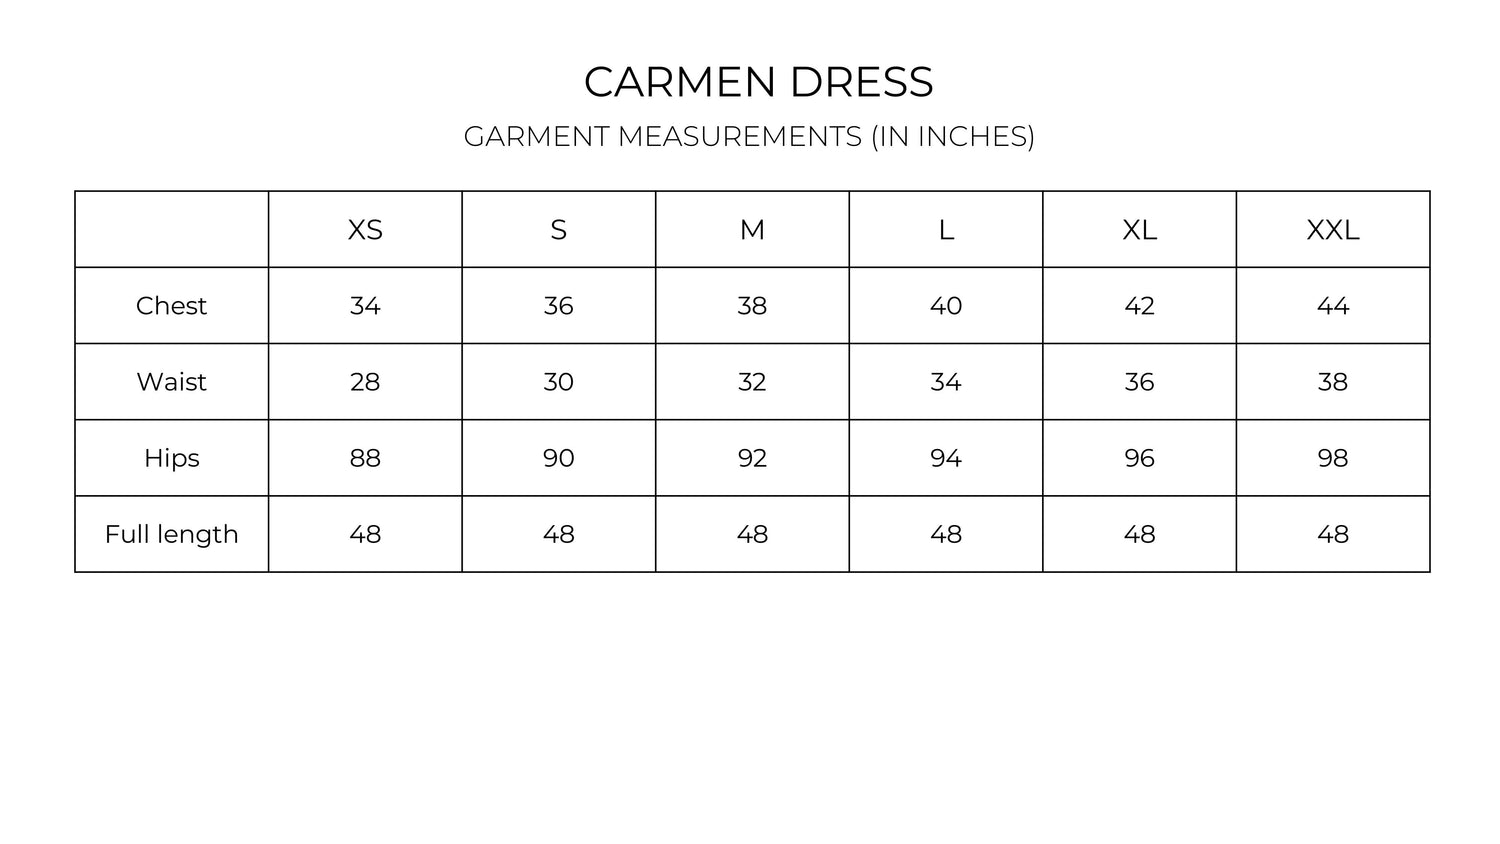 Carmen dress